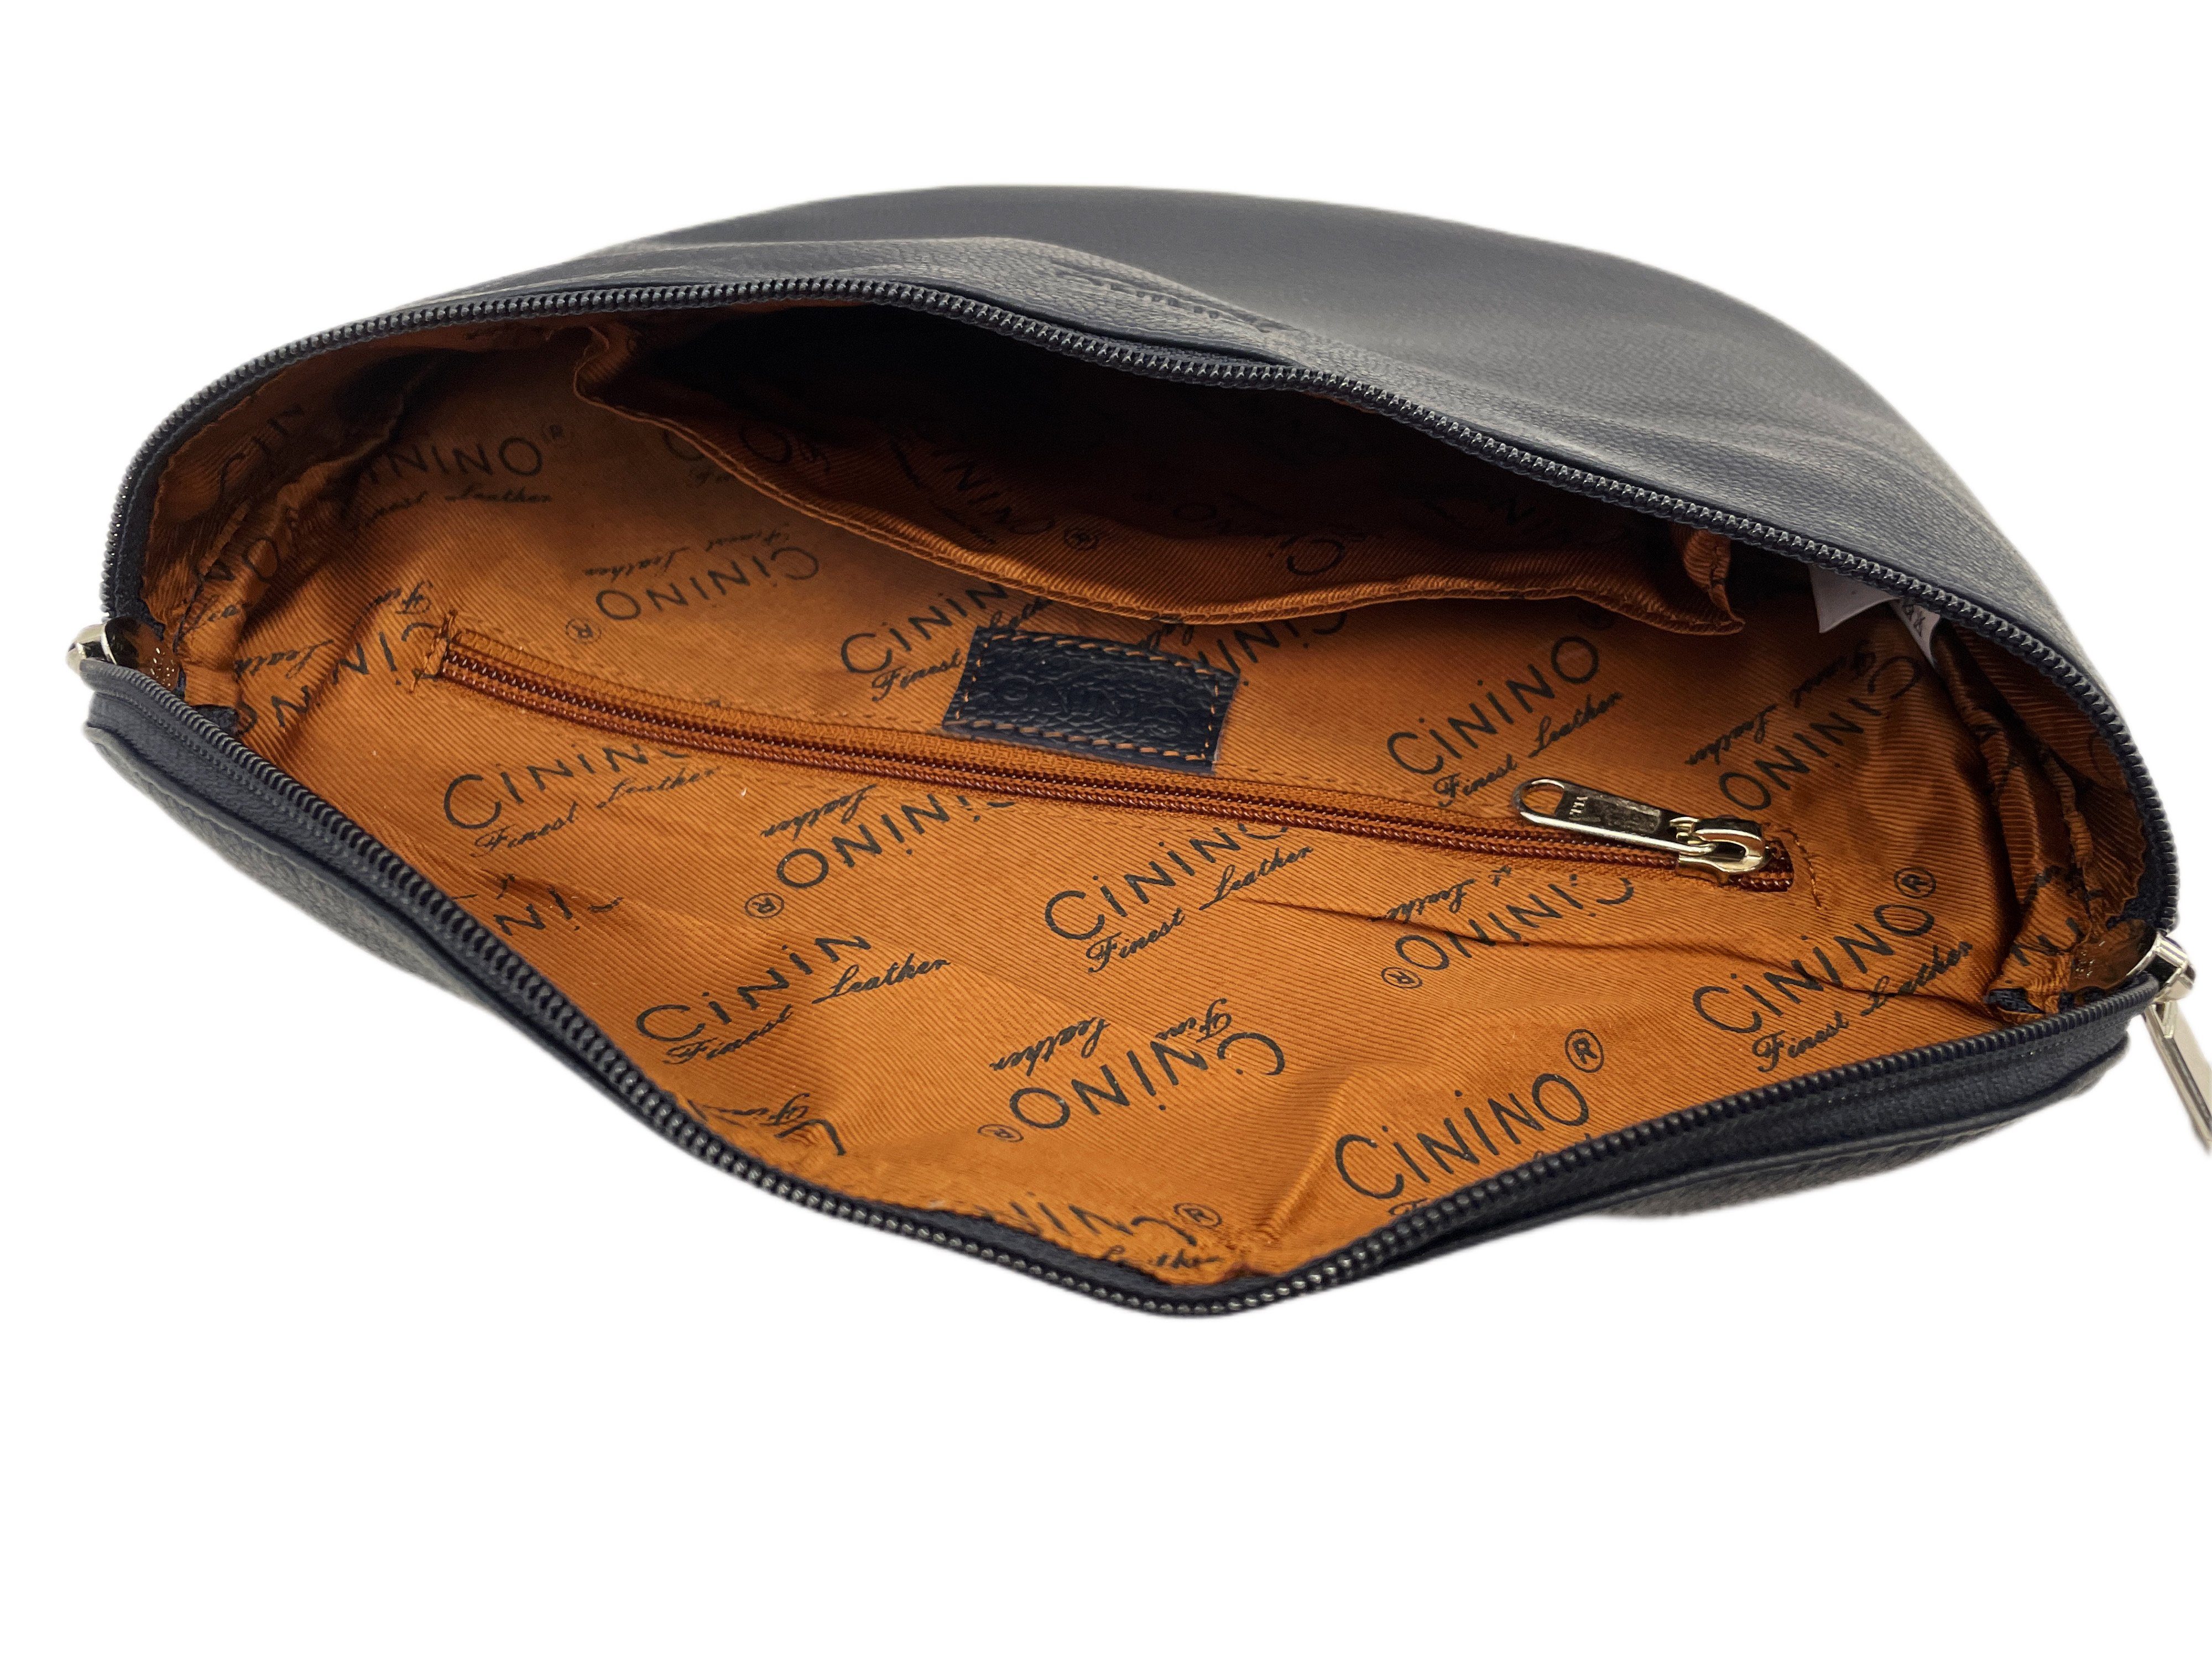 abnehmbaren Handtasche mit PINA, Schwarz Lederriemen Cinino Bauchtasche Ledertasche